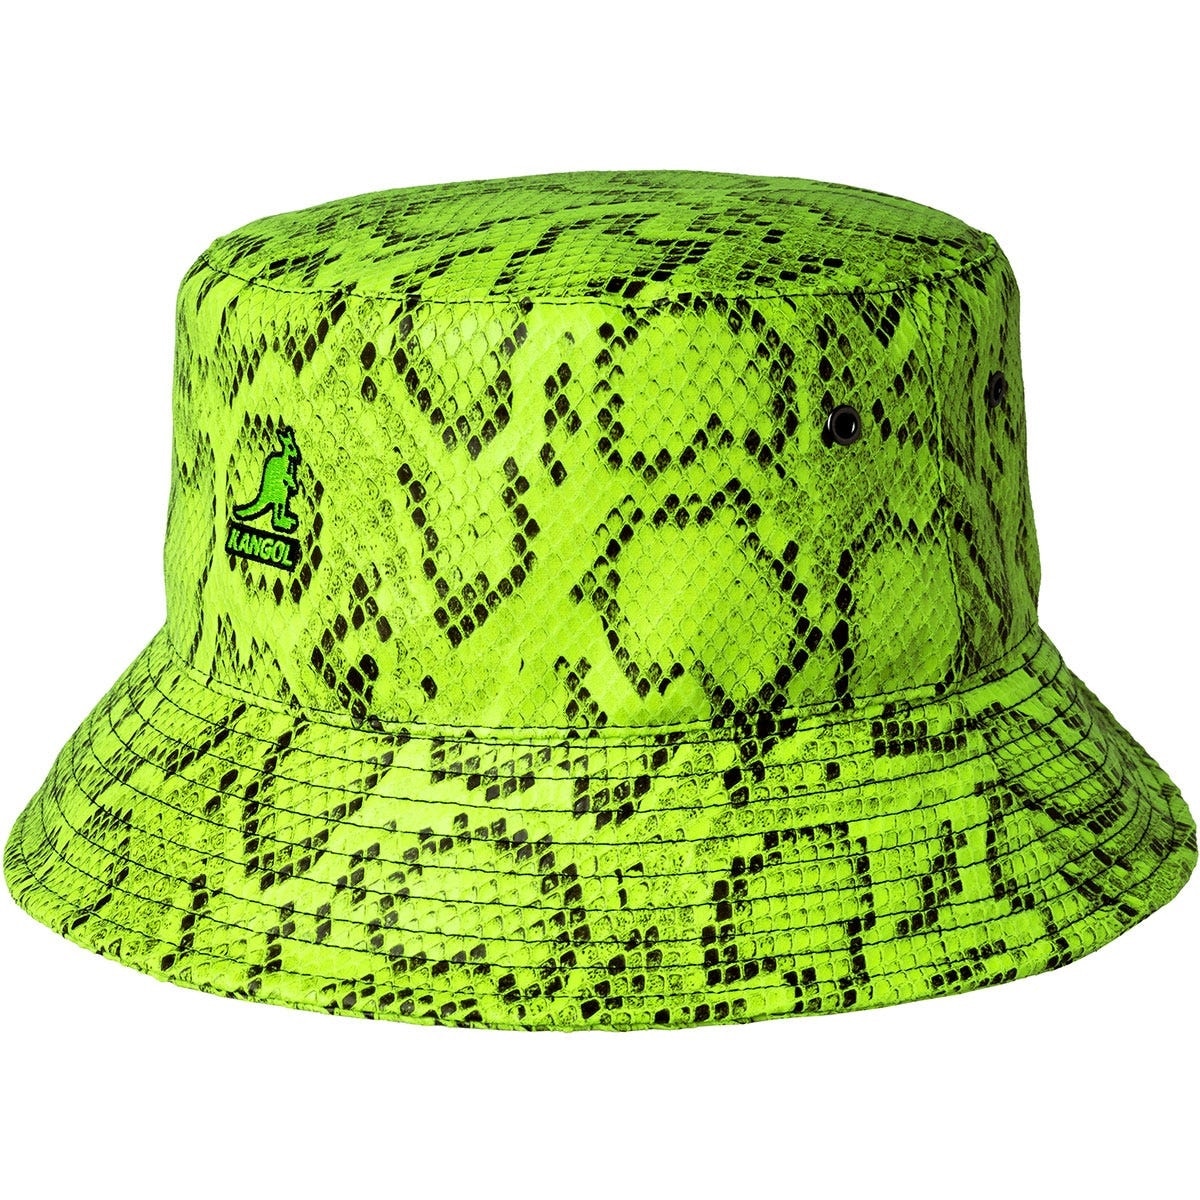 Hat python. Kangol k2094st. Шляпа лайм. Kangol Oil Green. Зелёная шляпа в Китае.